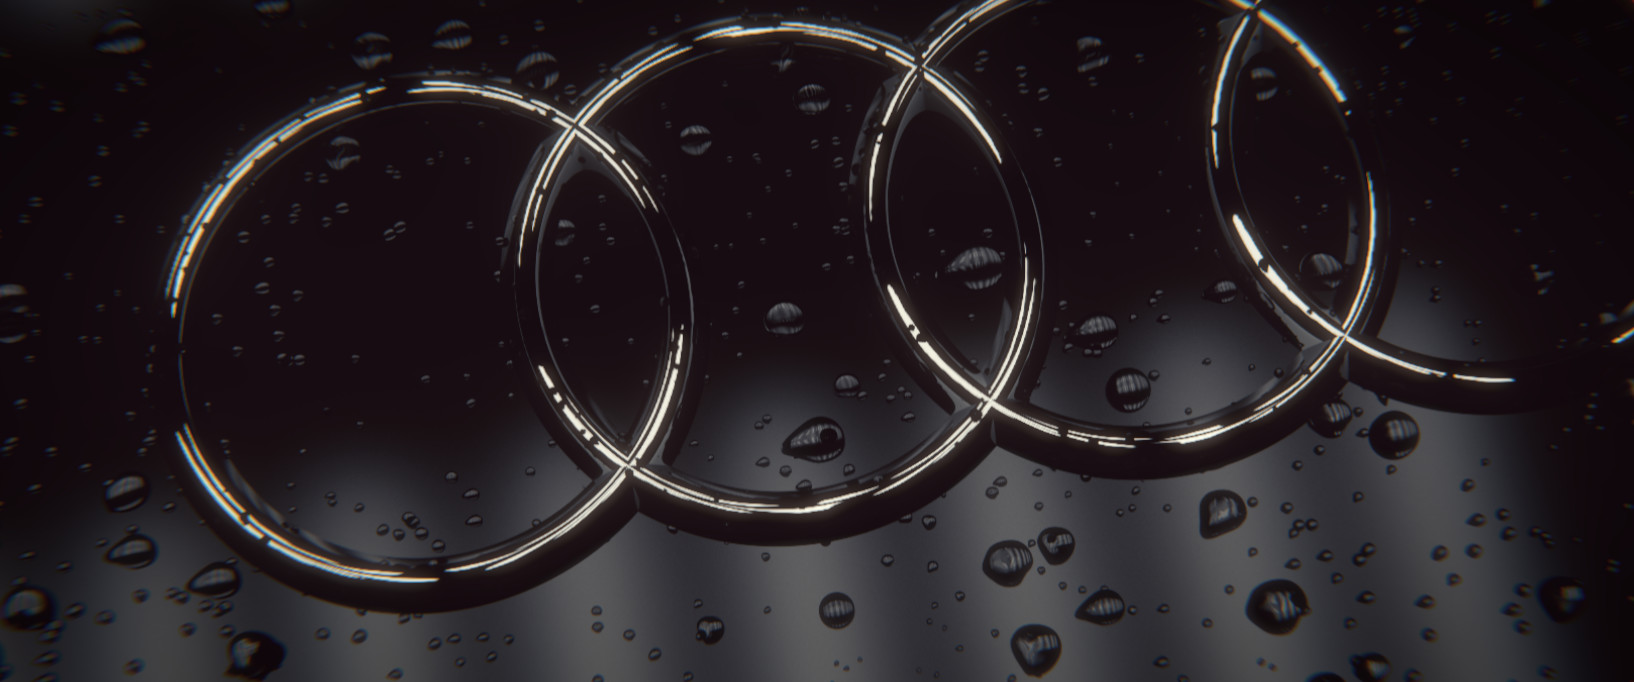 ArtStation - Audi logo with water drops